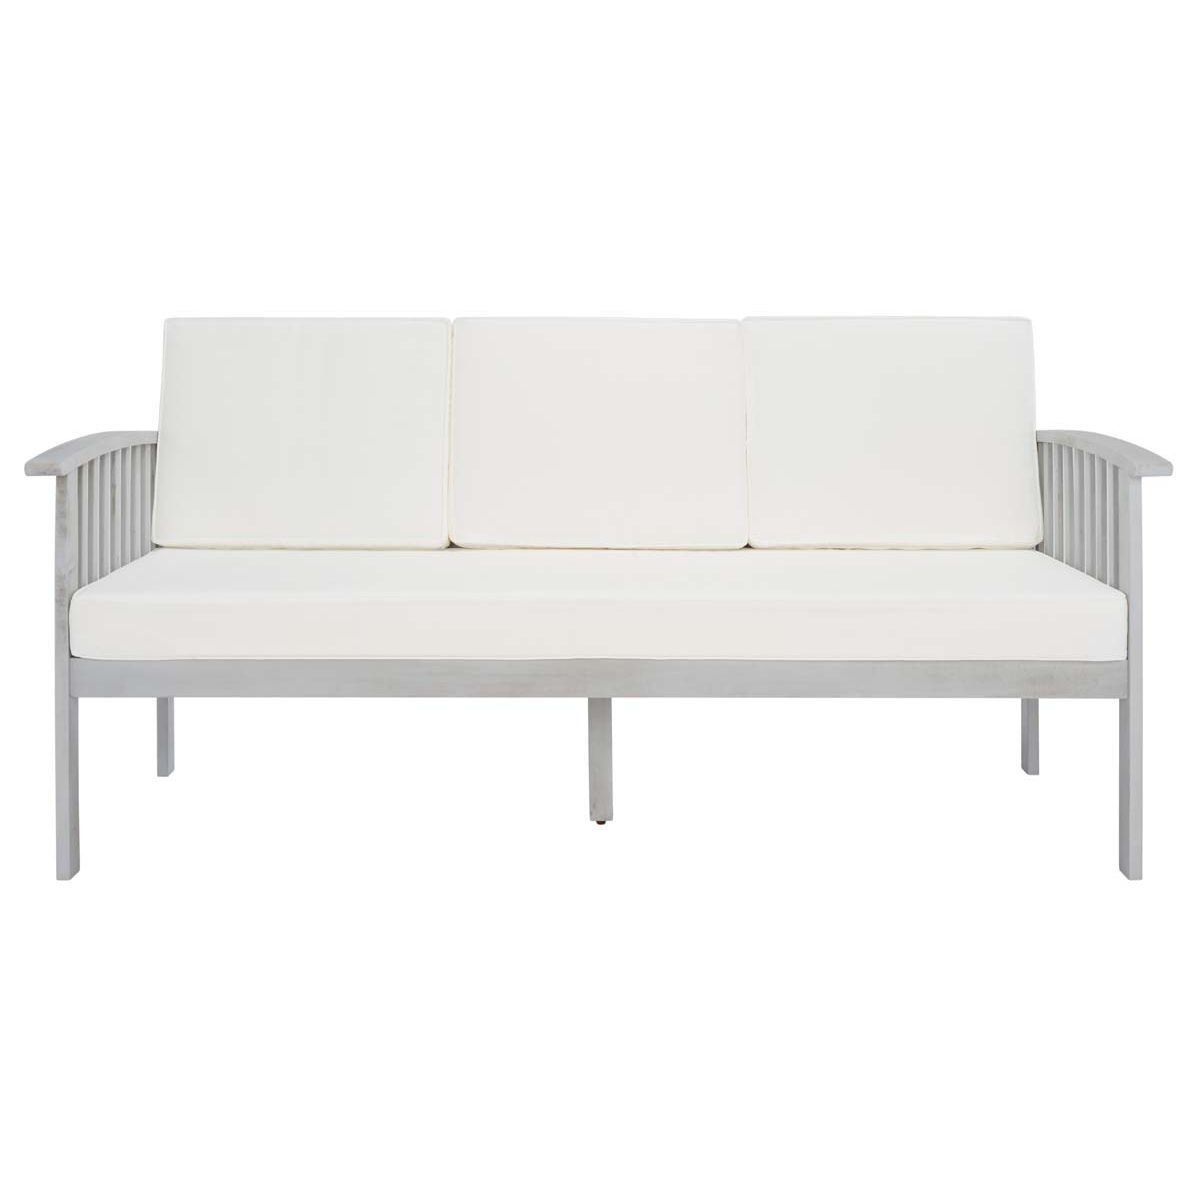 Safavieh Finnick Outdoor Bench , PAT7303 - Grey Wood/Beige Cushion